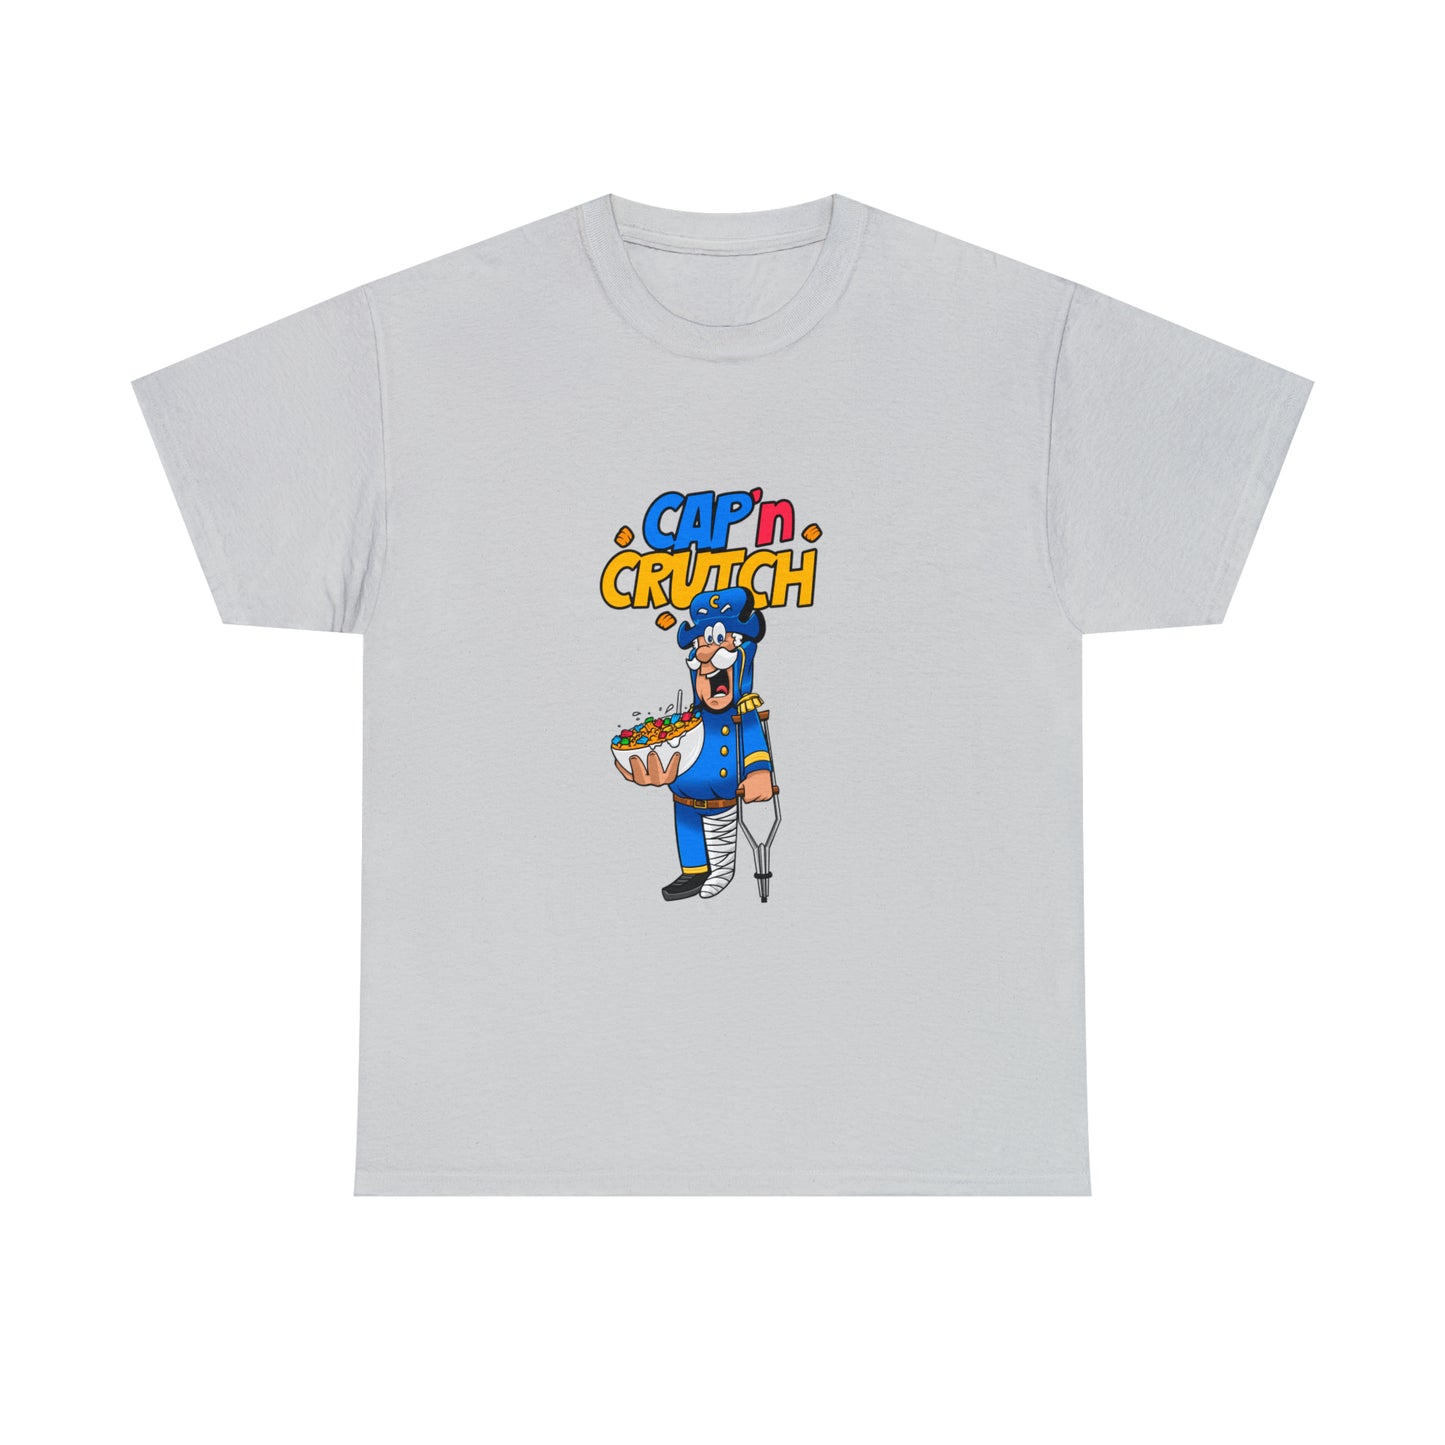 Custom Parody T-shirt, Cap N Crutch design